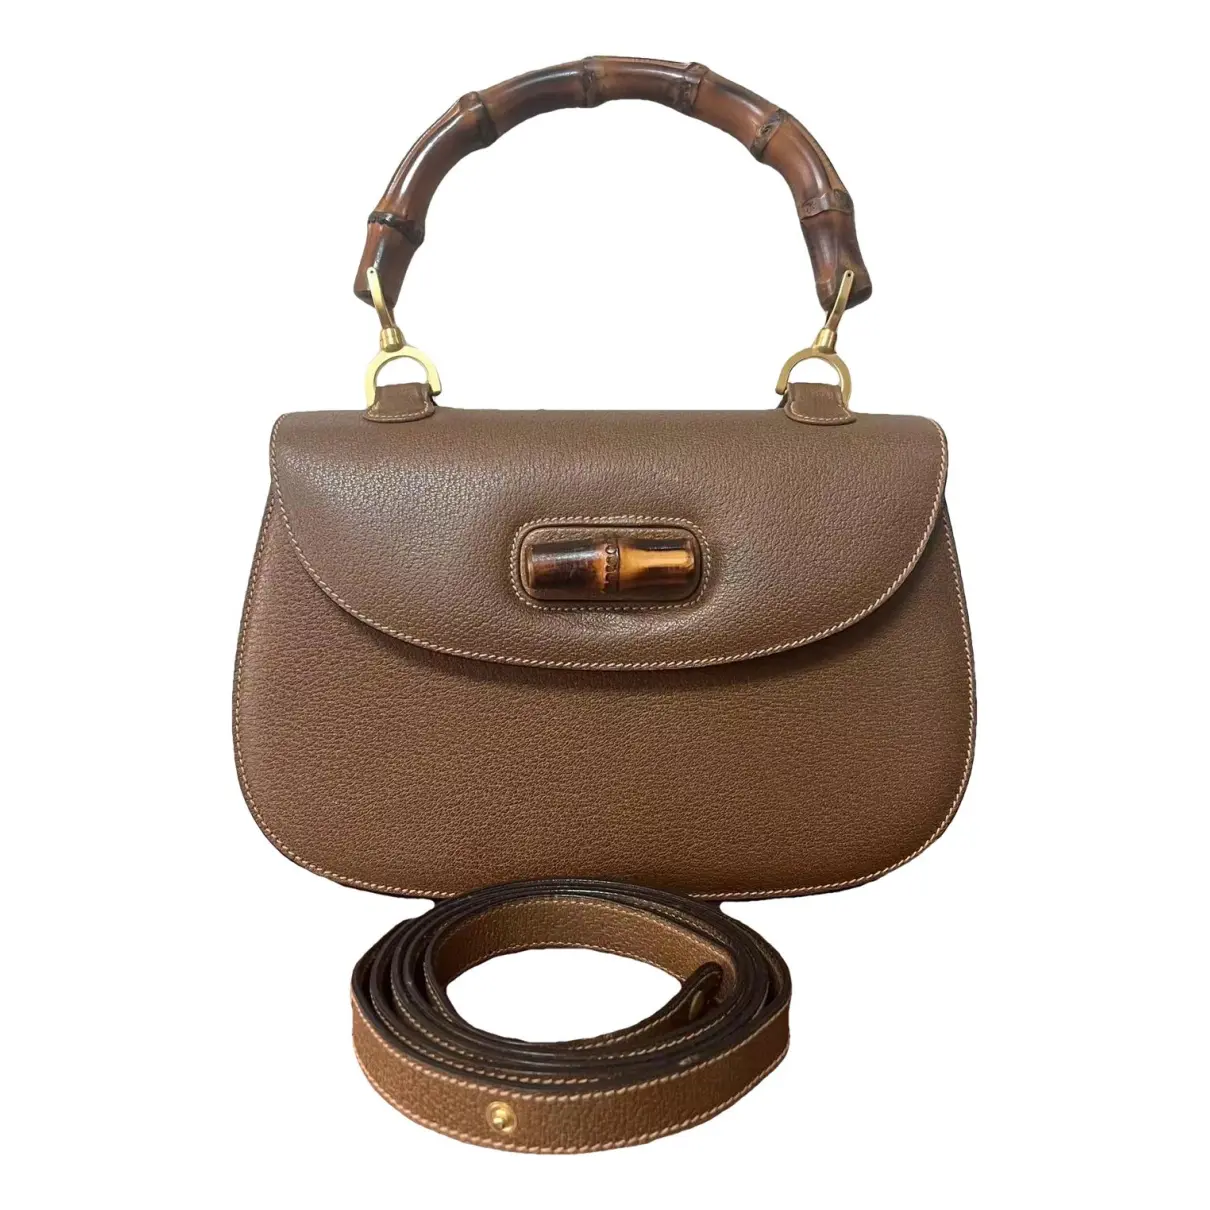 Convertible Bamboo Top Handle leather handbag